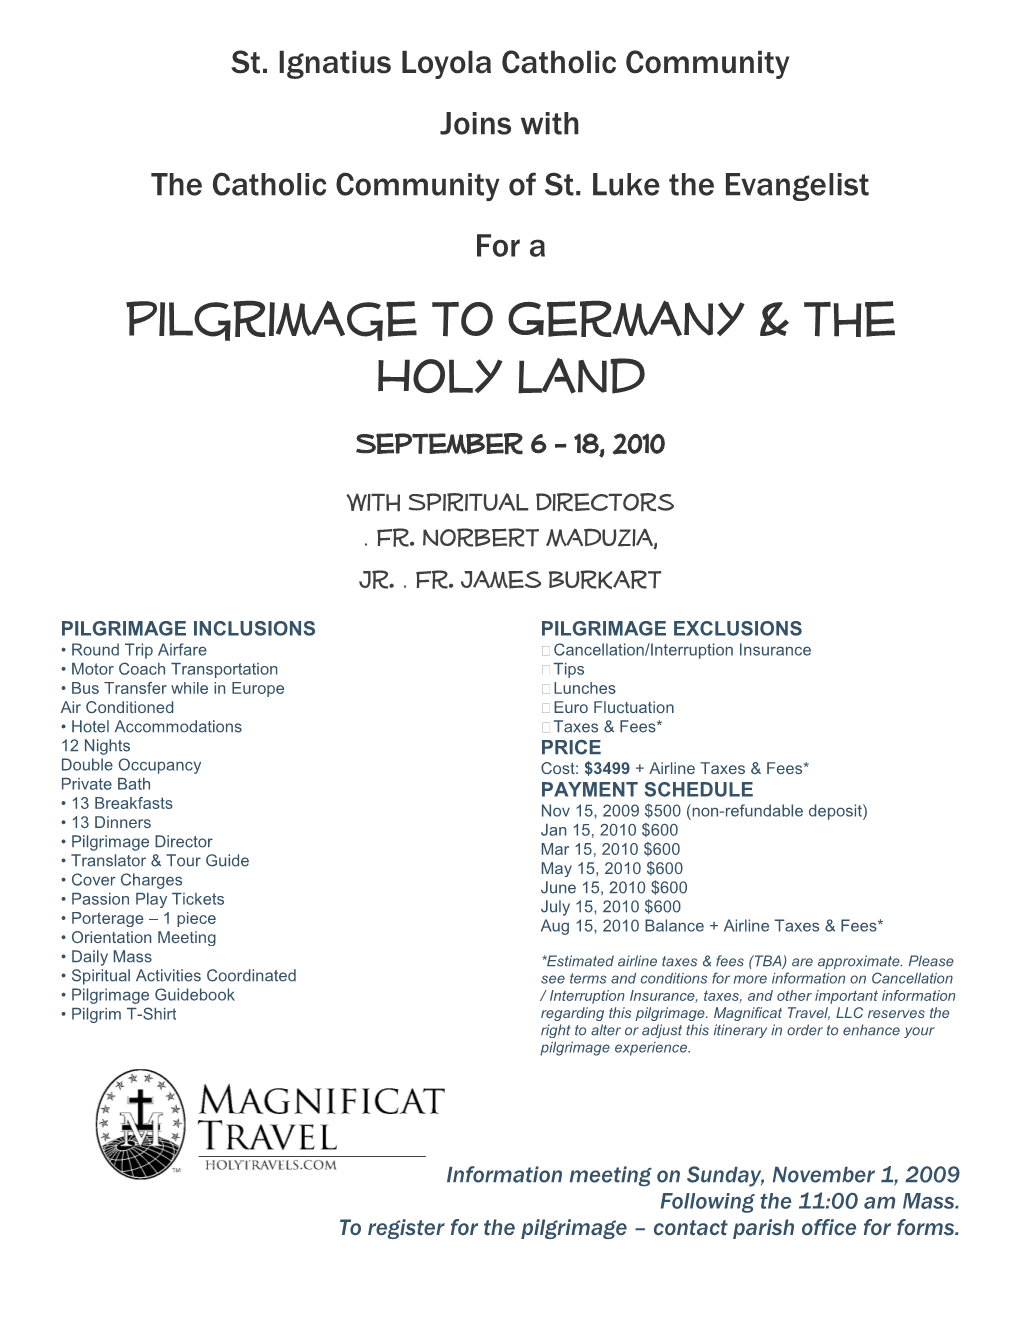 Pilgrimage to Germany & the Holy Land